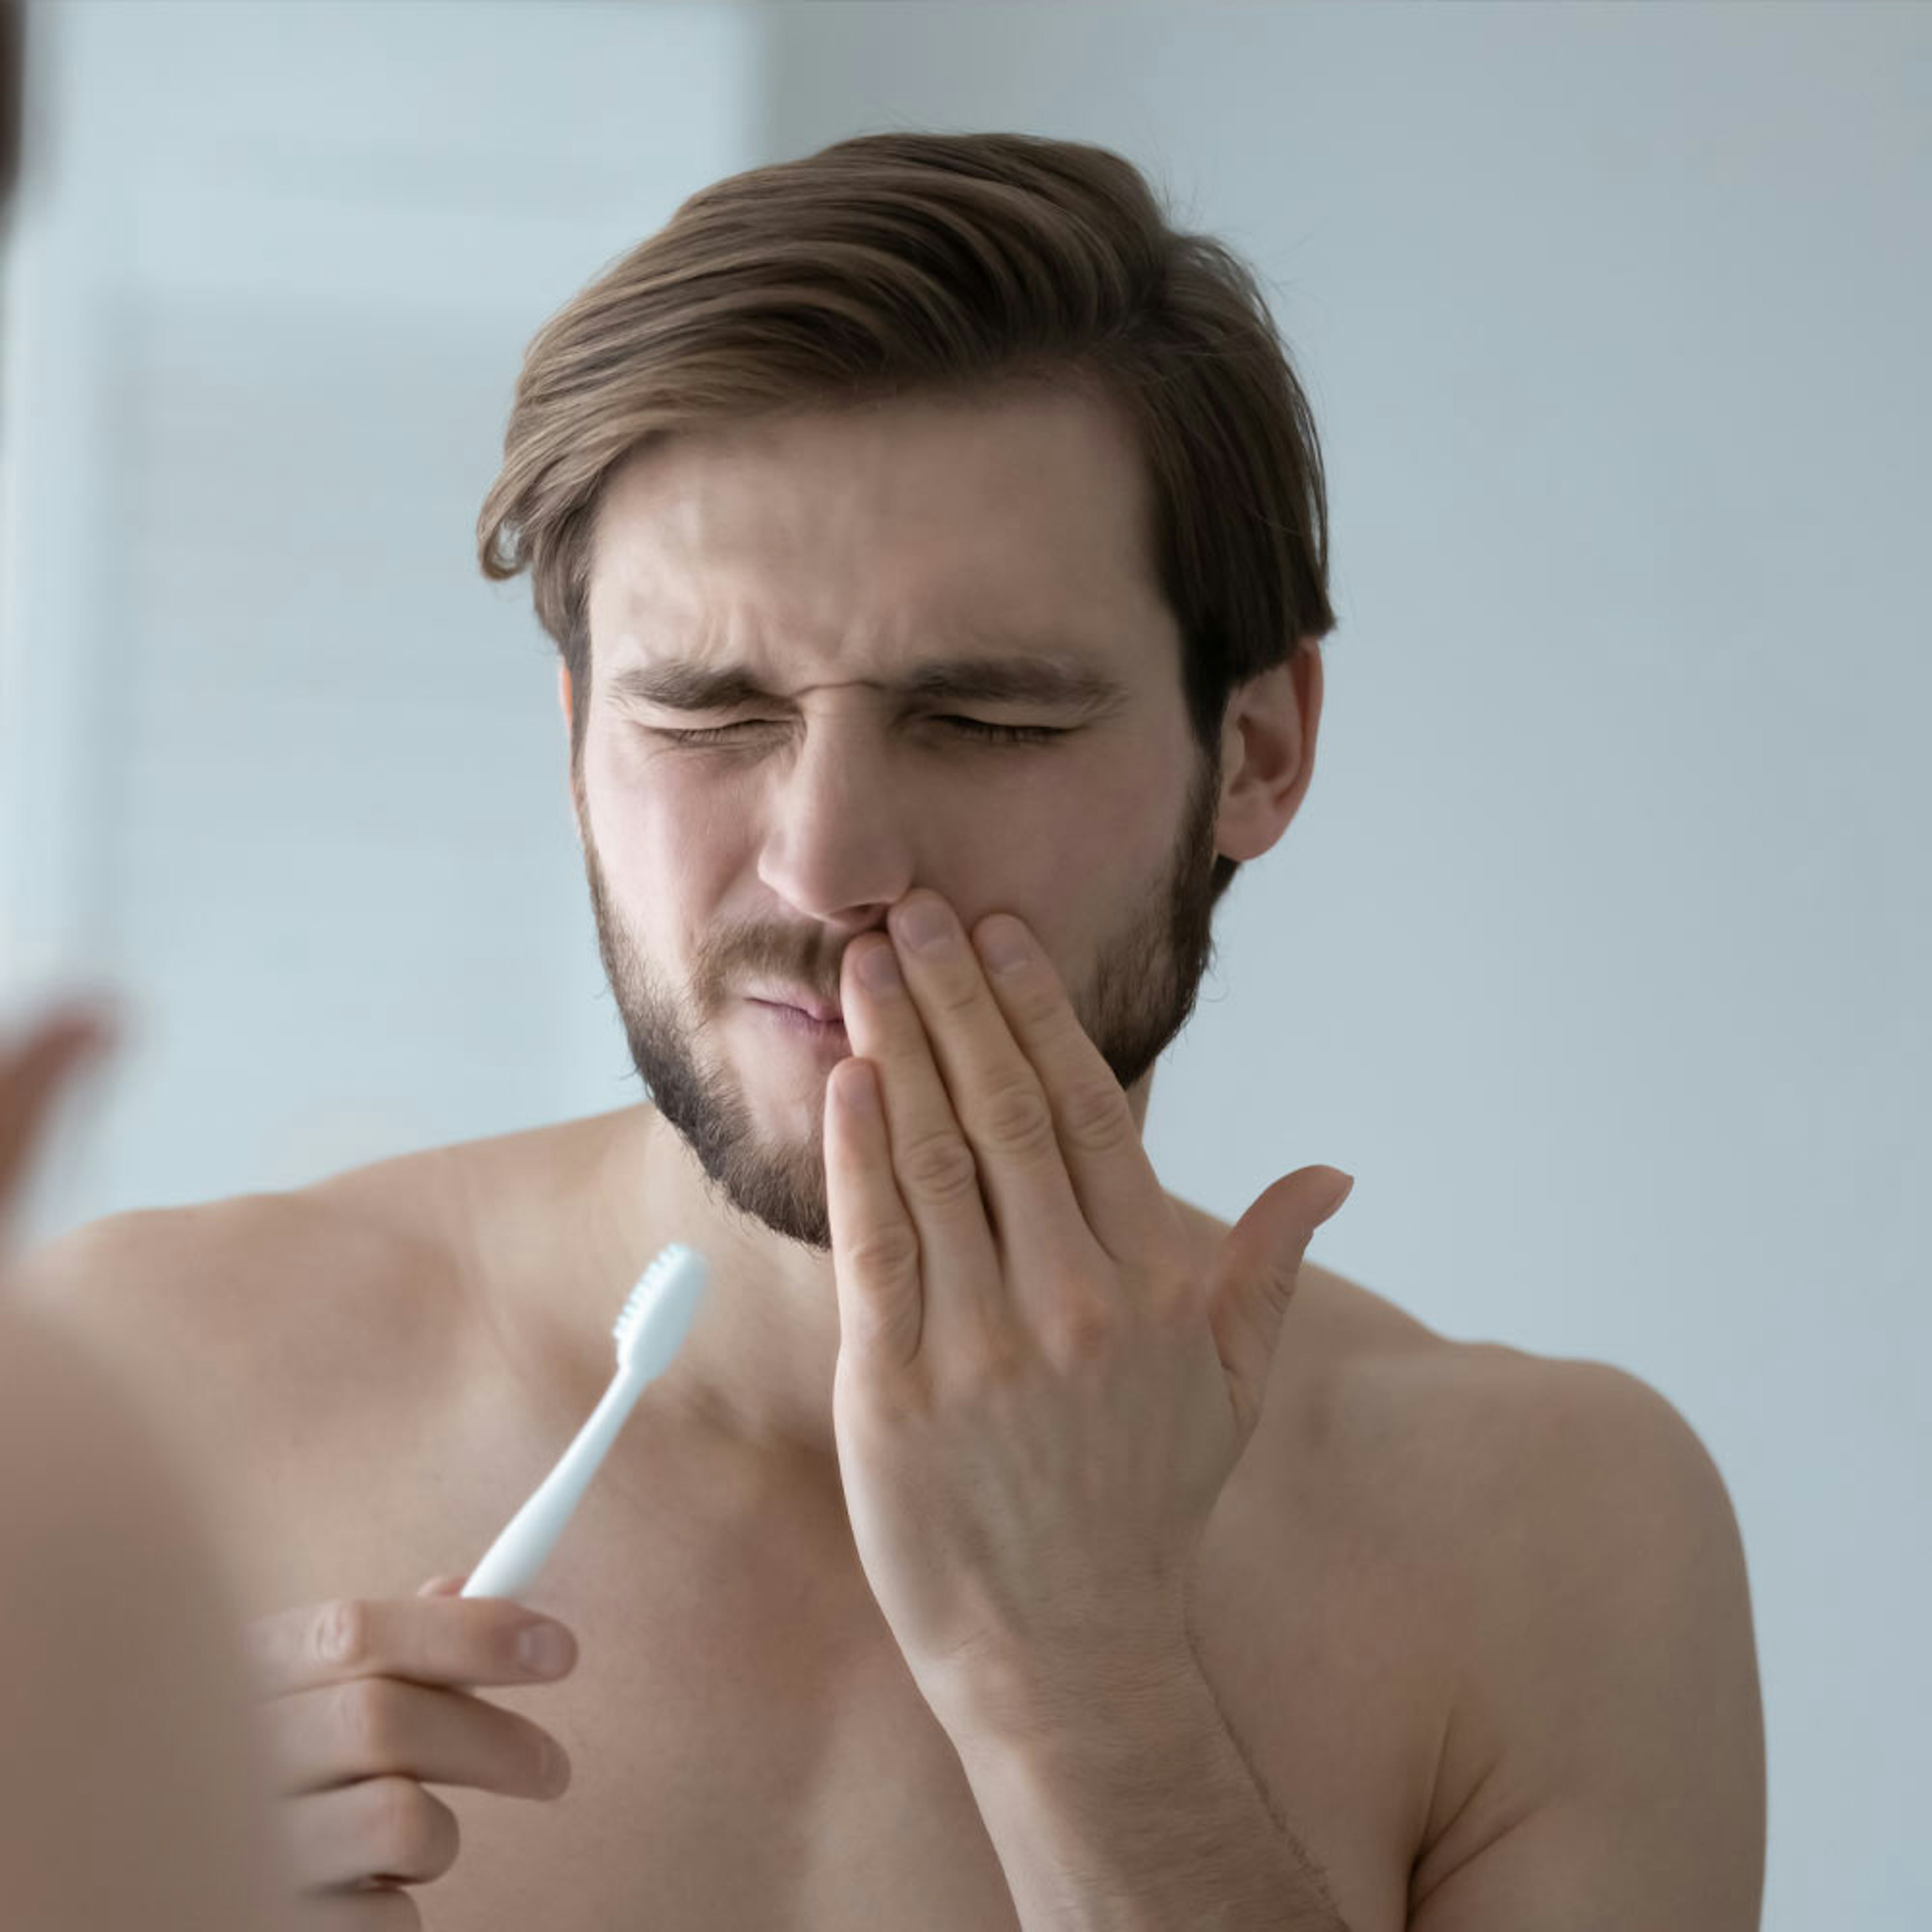 Man brushing teeth with jaw pain